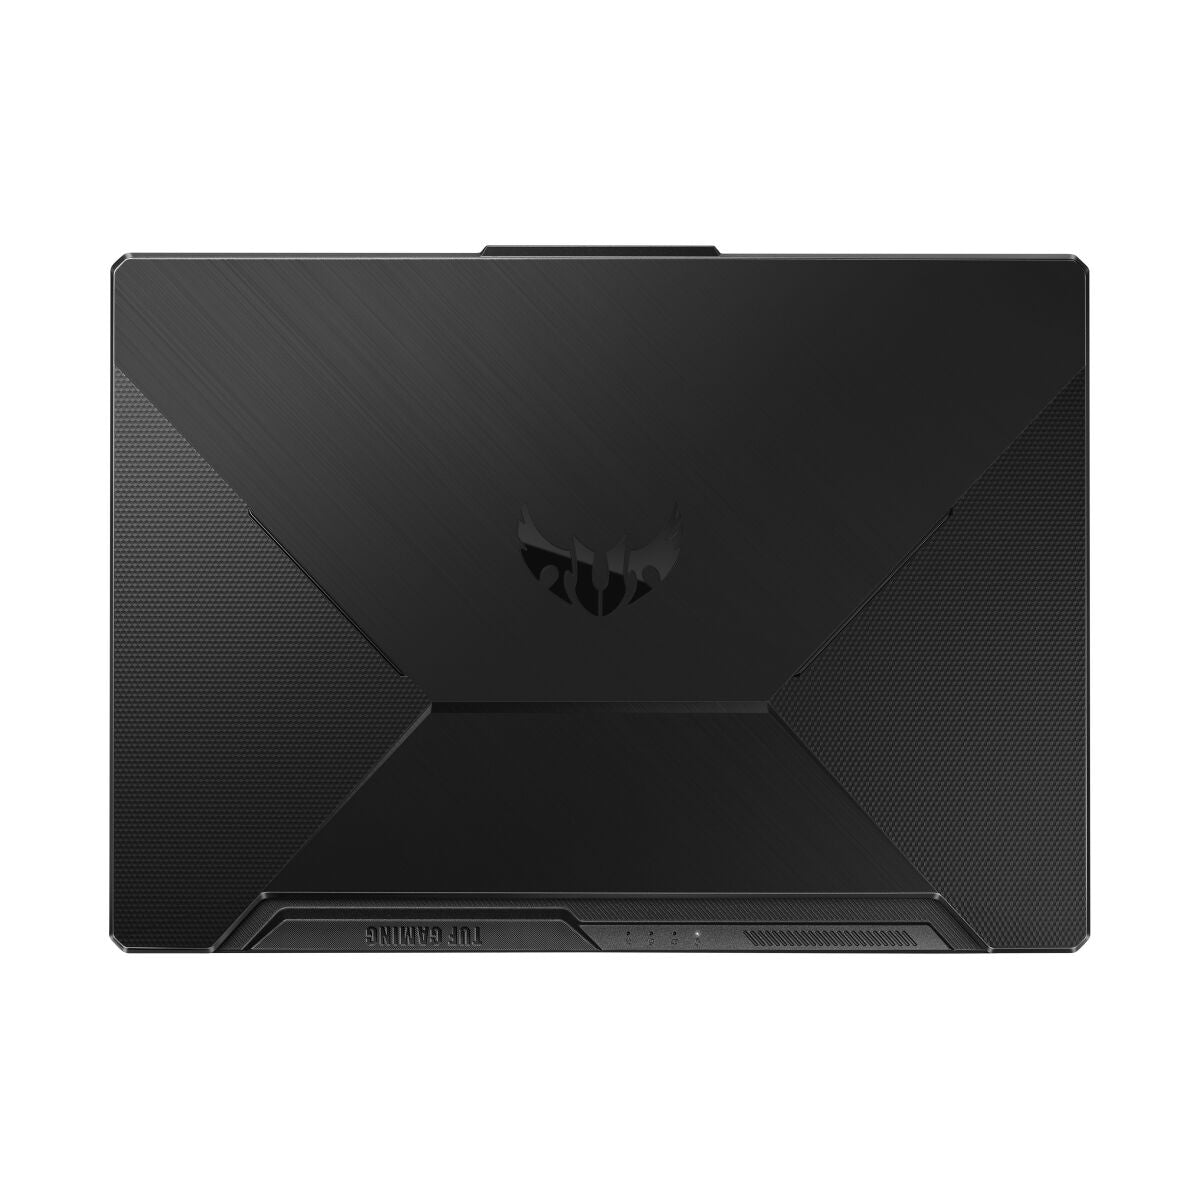 ASUS TUF Gaming FX506LU-HN003T Intel Core i5-10300H 8GB RAM 512GB SSD 15.6" - Black